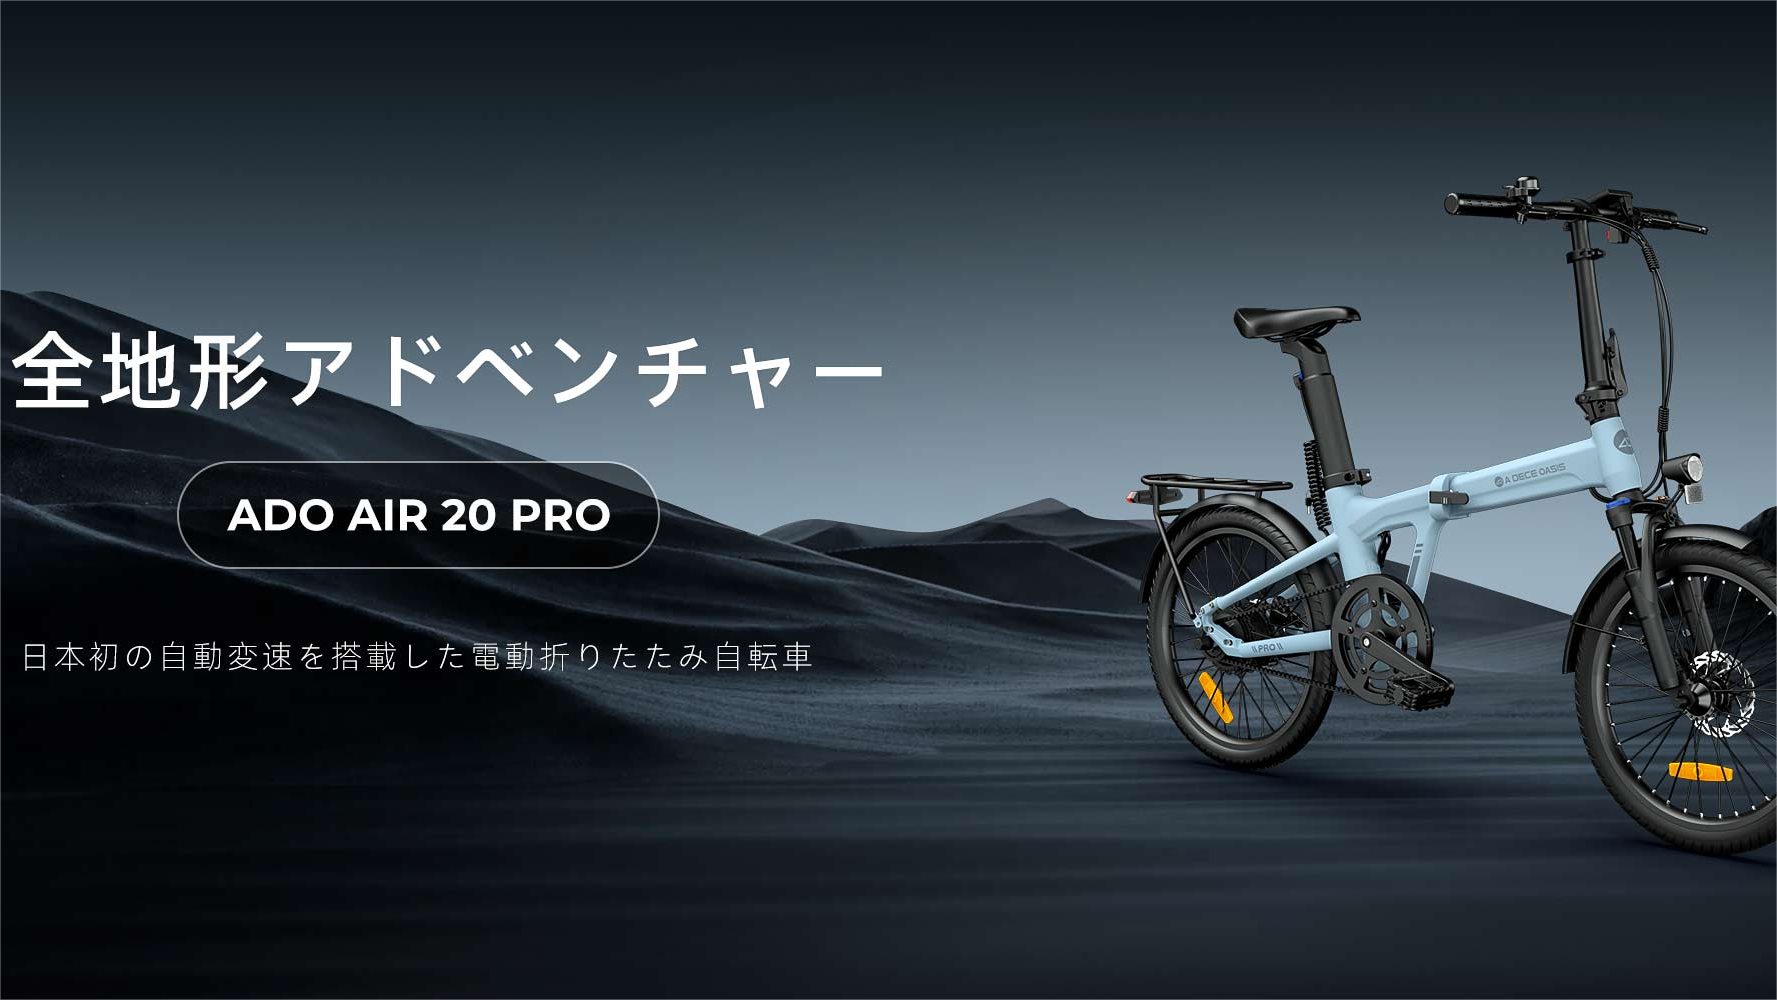 ADO Air 20 Pro は新型の電動駆動装置を搭載し、シングルスピードの電動アシスト自転車を新たな高みへと引き上げました！